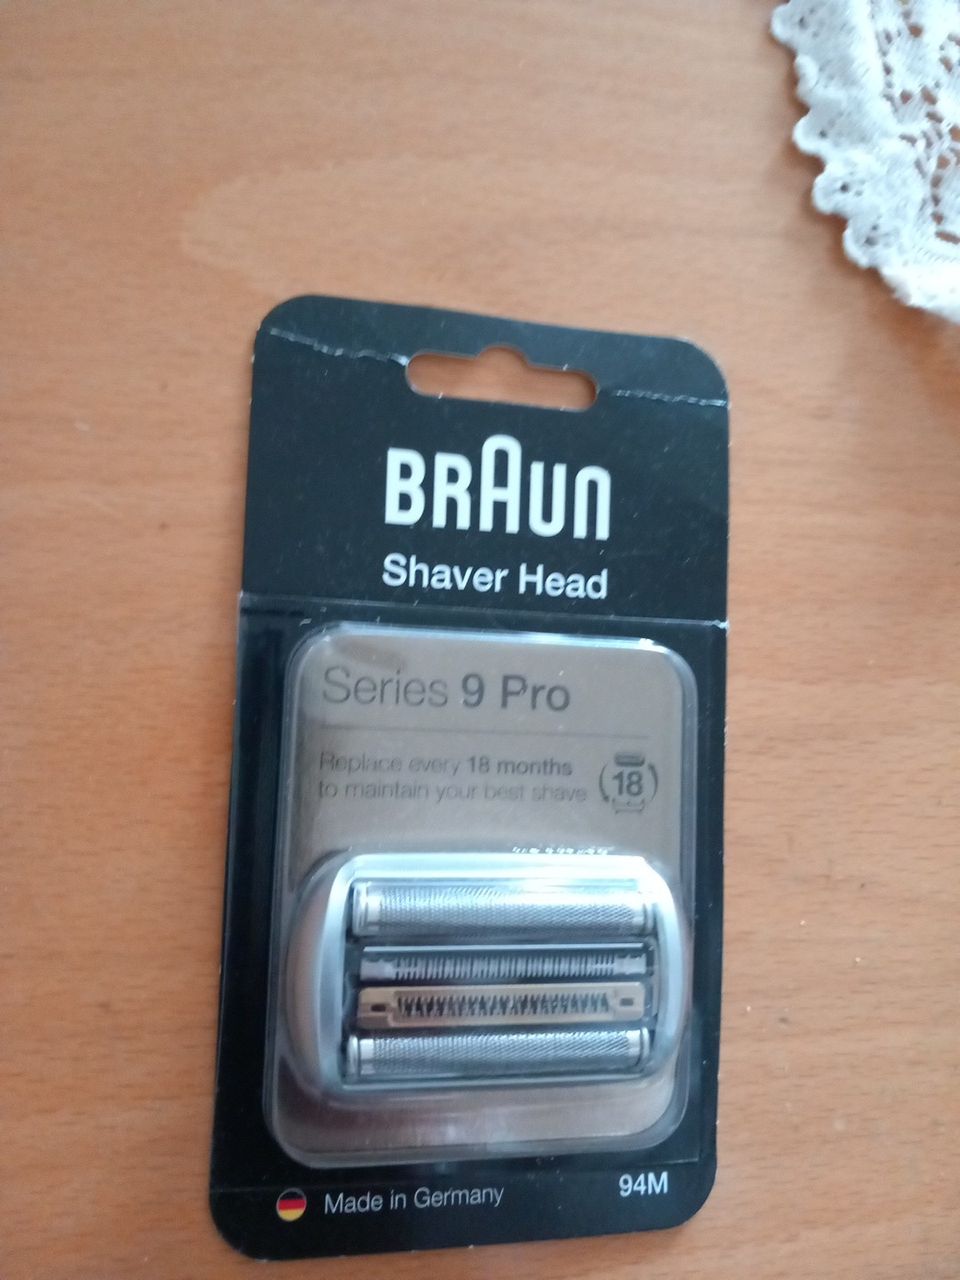 Braun shaver head